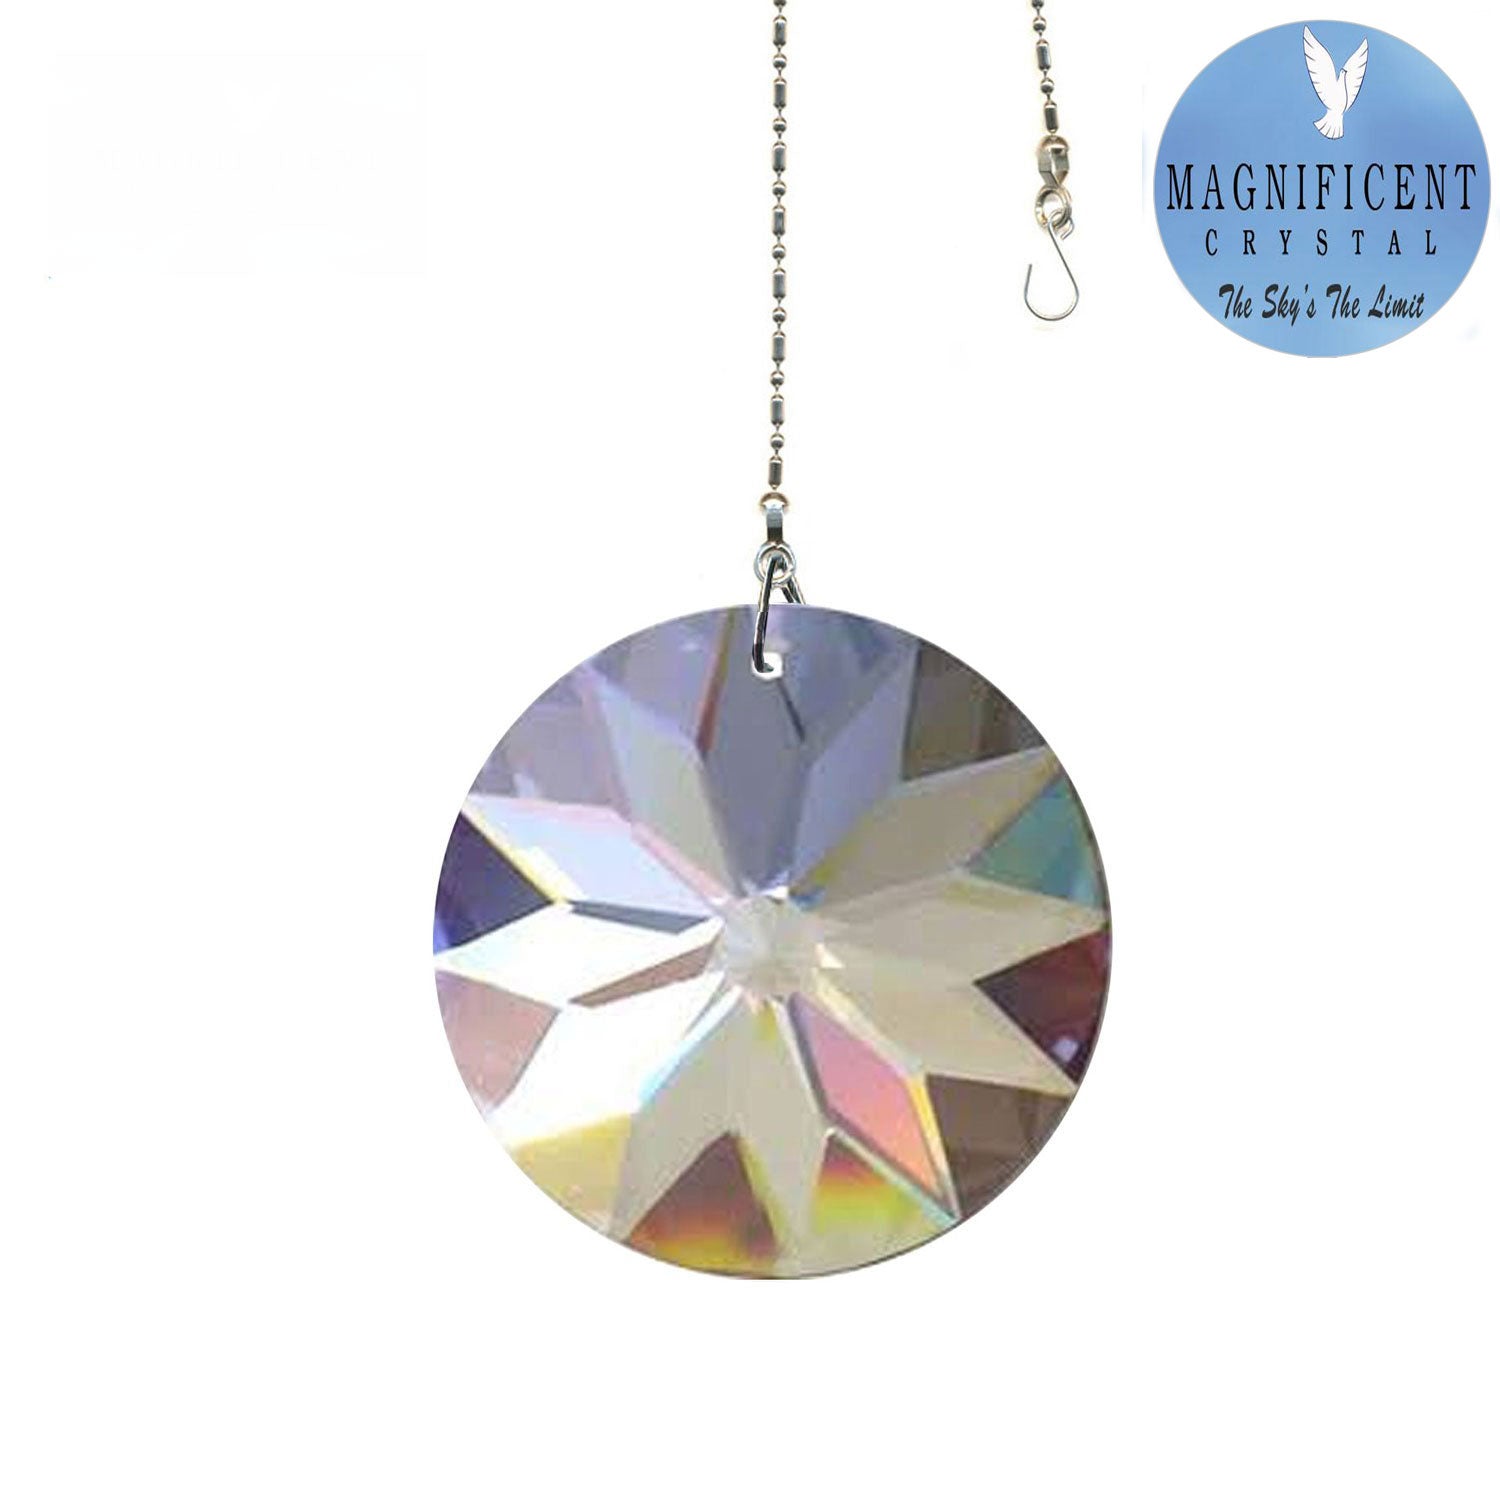 Buy Crystal Suncatcher - Crystal Disk Prism – CrystalPlace